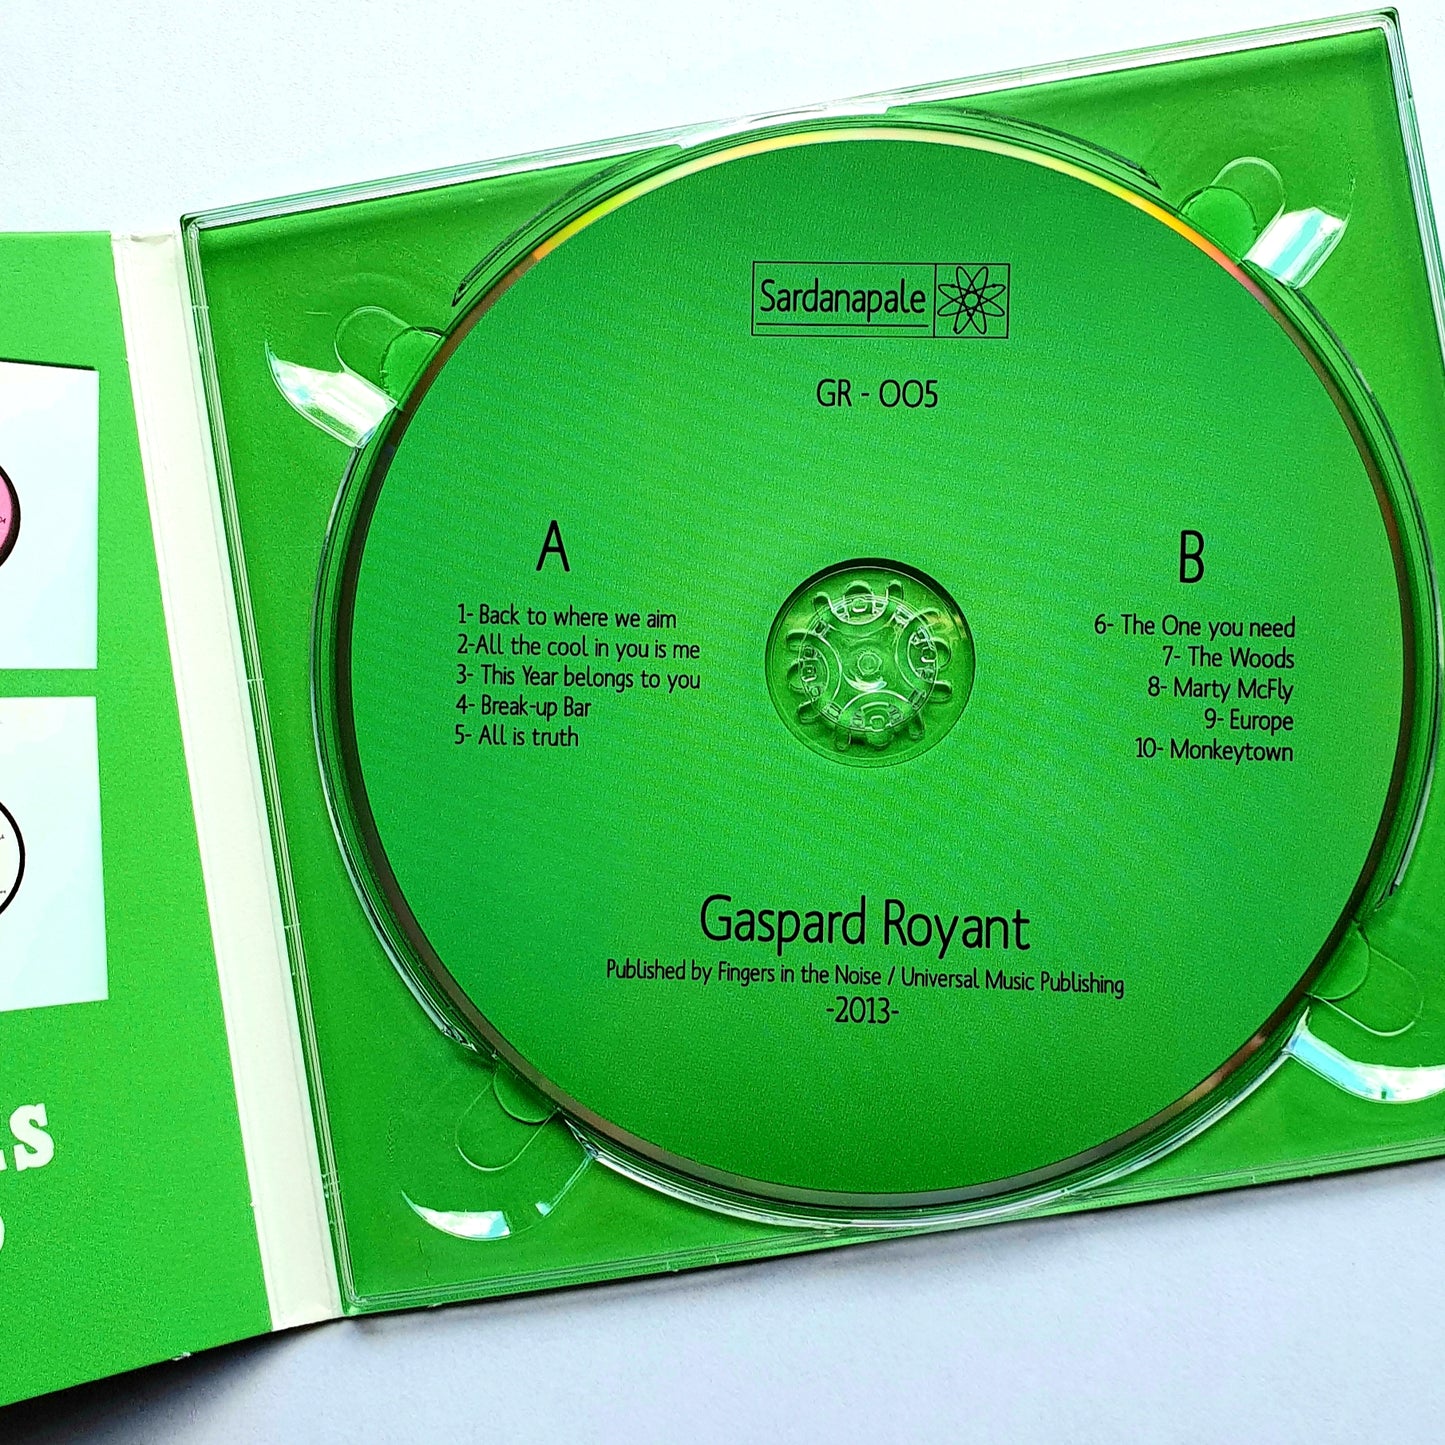 GASPARD ROYANT " 10 Hit Wonder" (format CD)